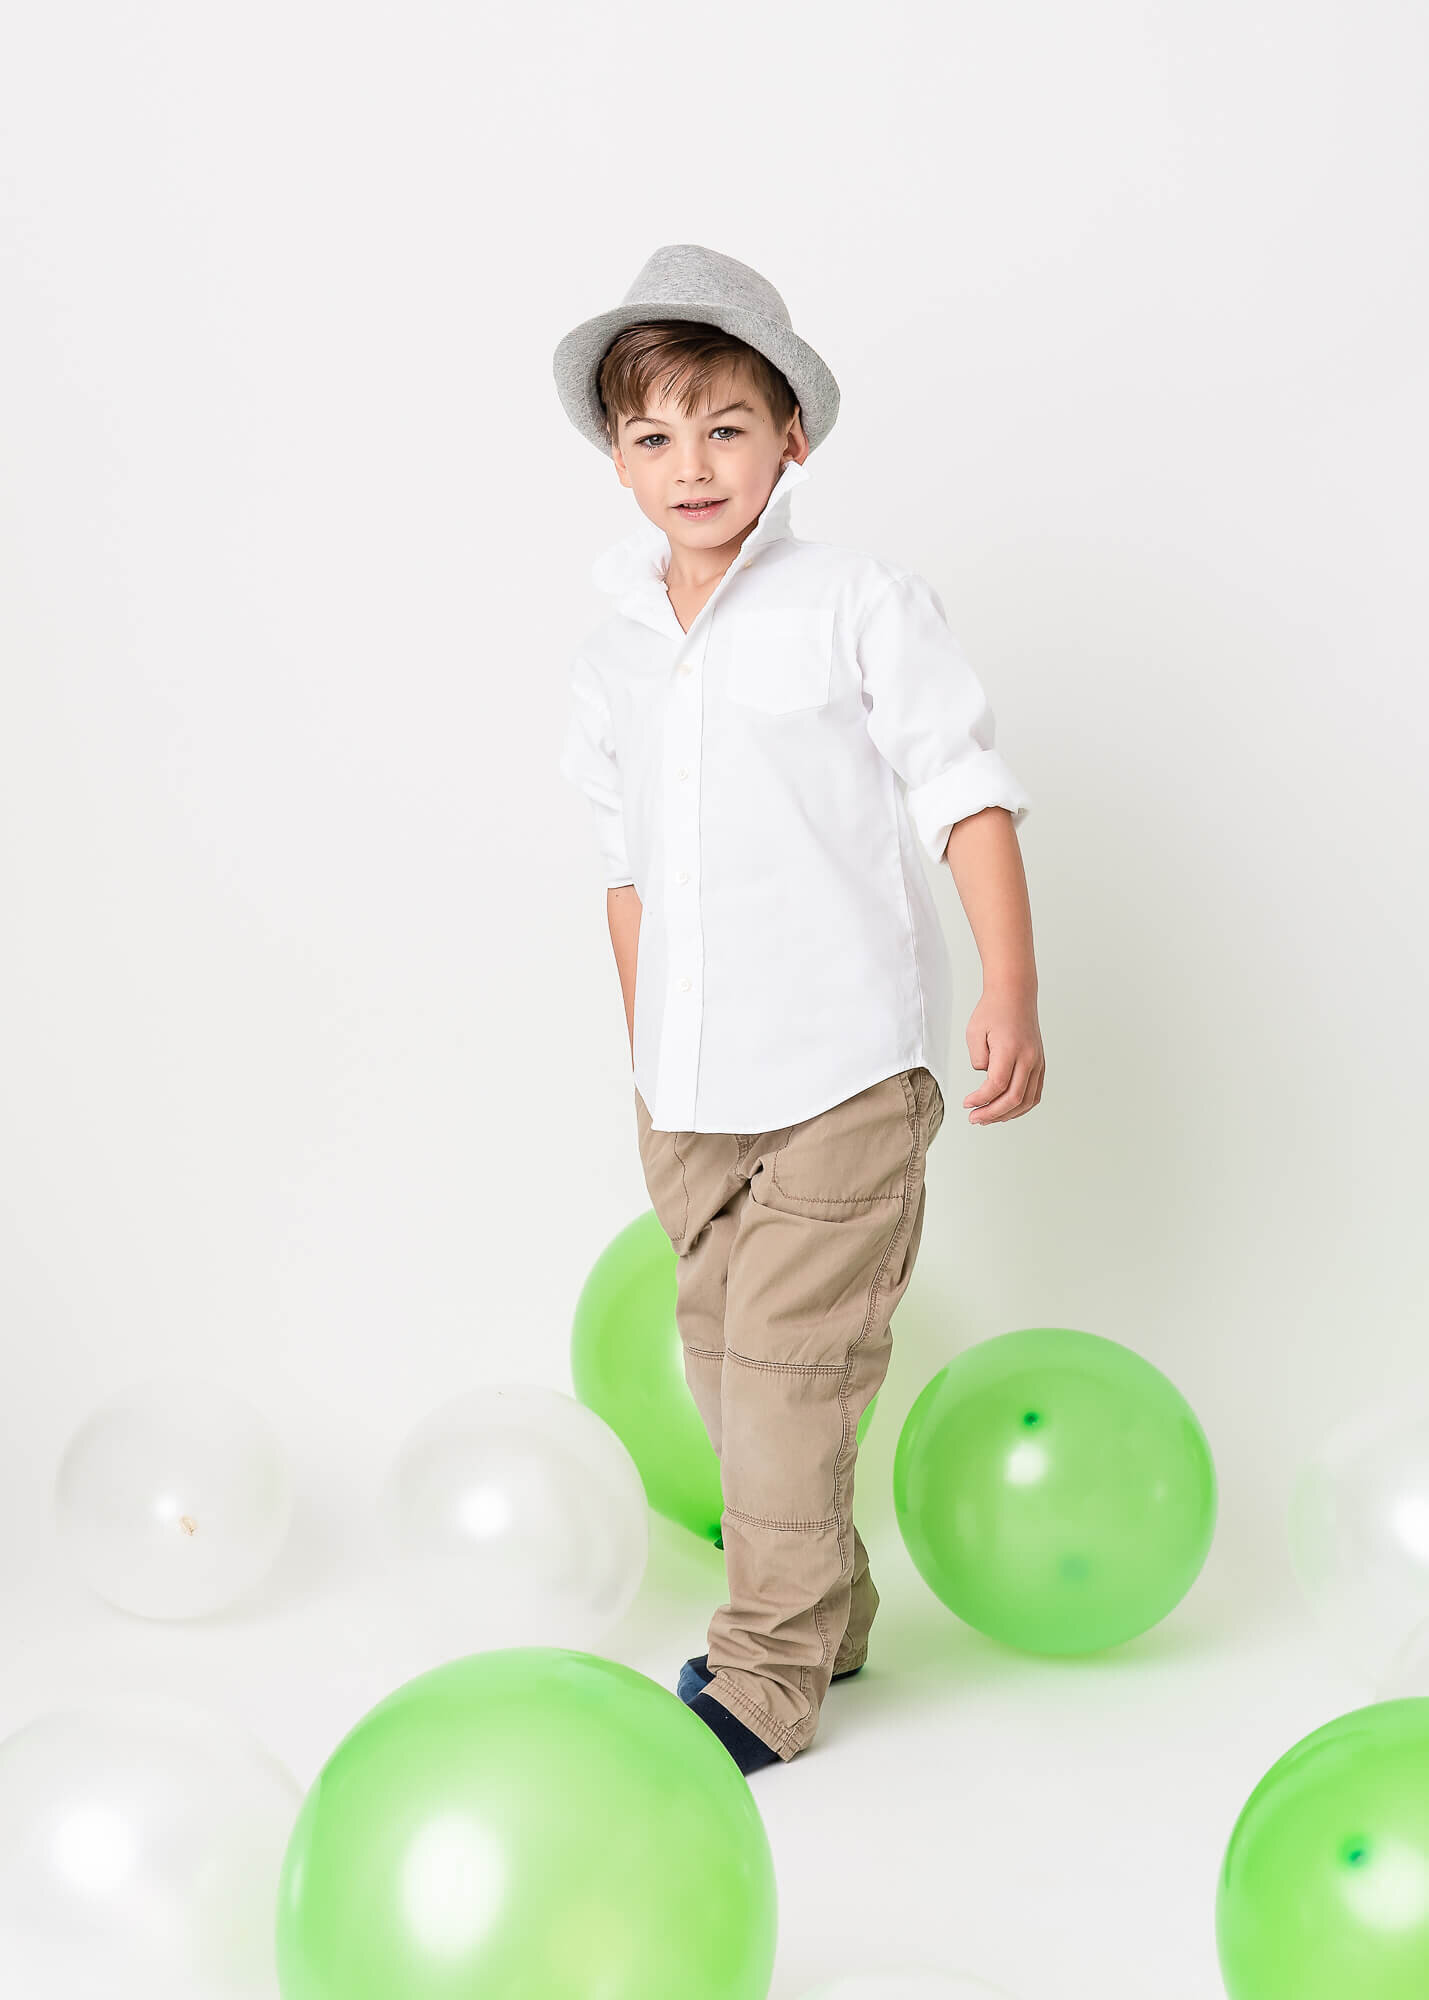 birthday boy portrait with balloons